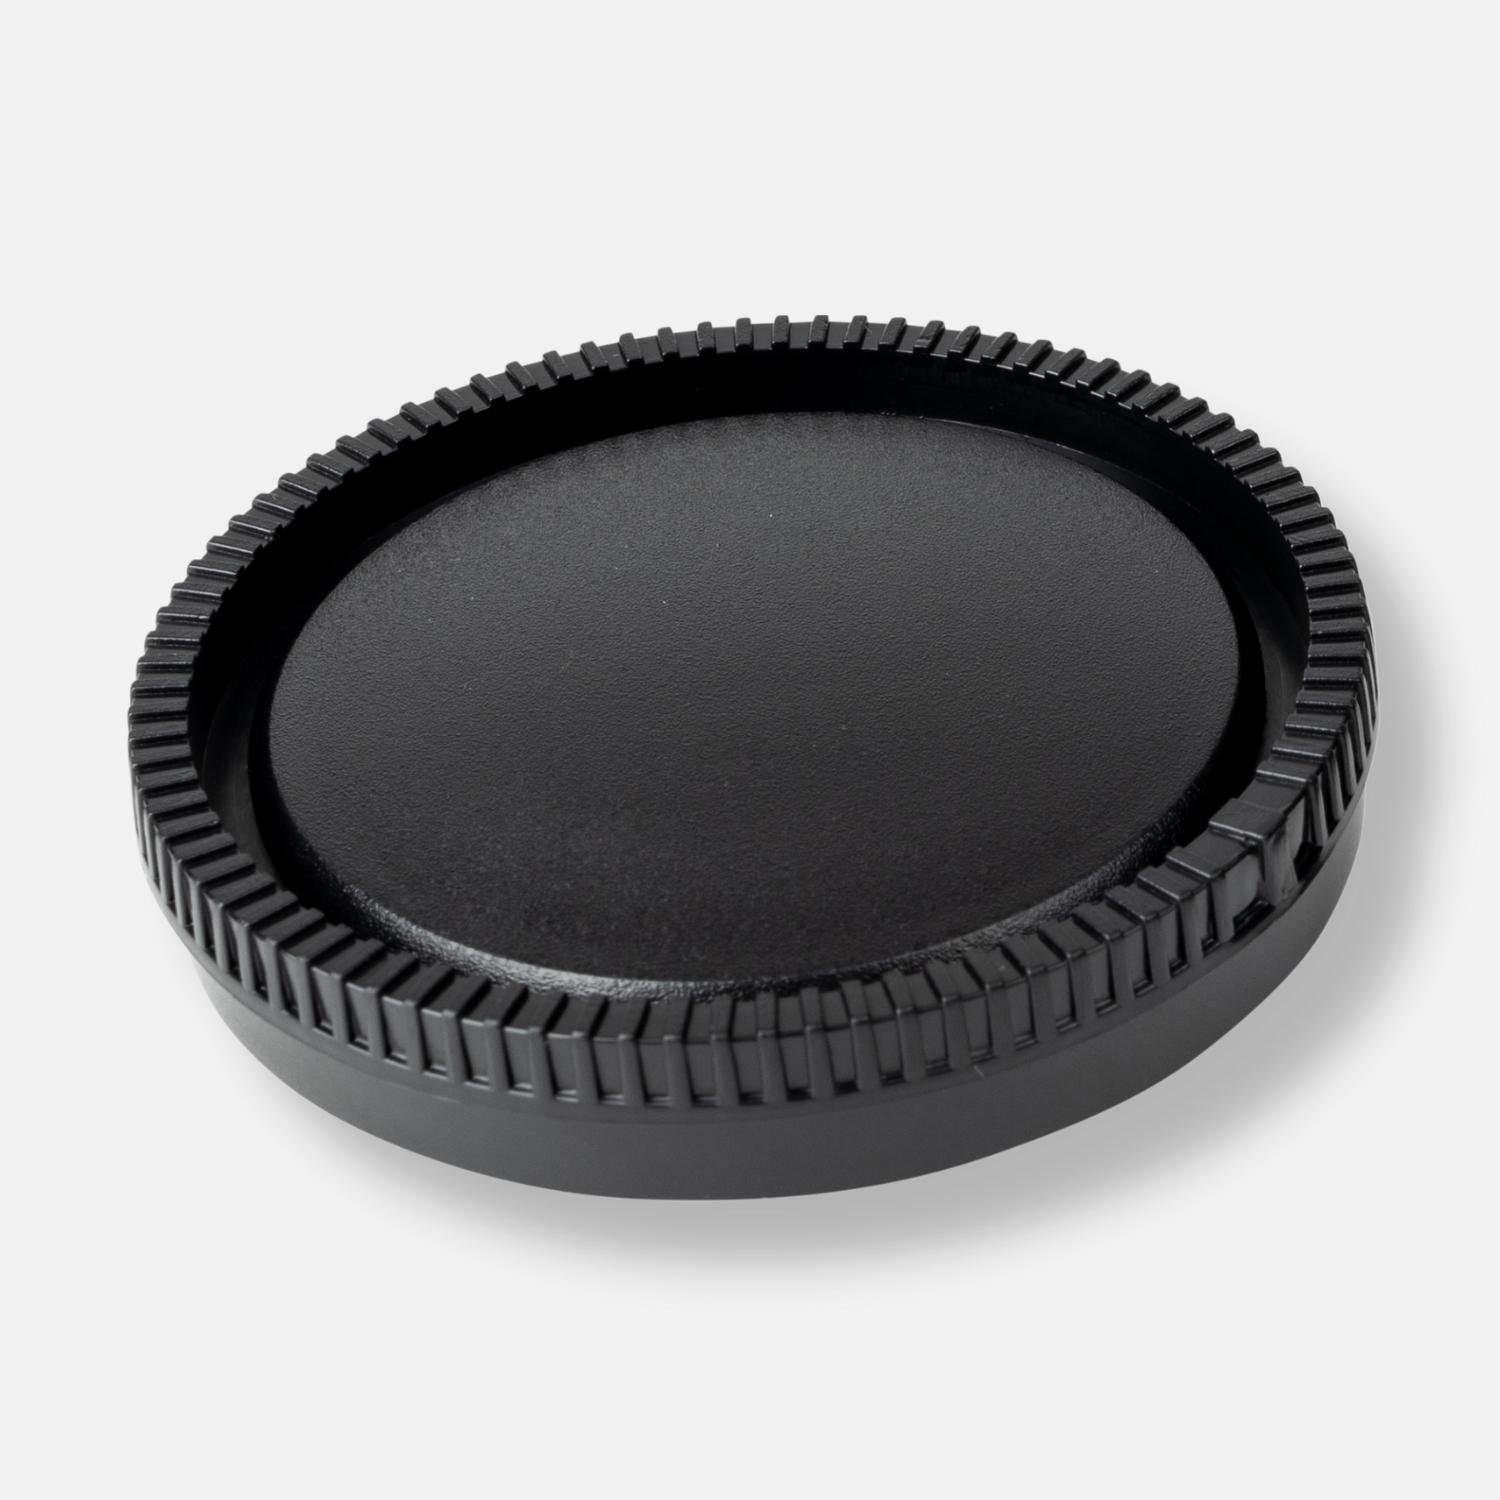 Lens-Aid DSLR, Cap, Gehäusedeckel für E-Bajonett, Systemkamera Sony Body